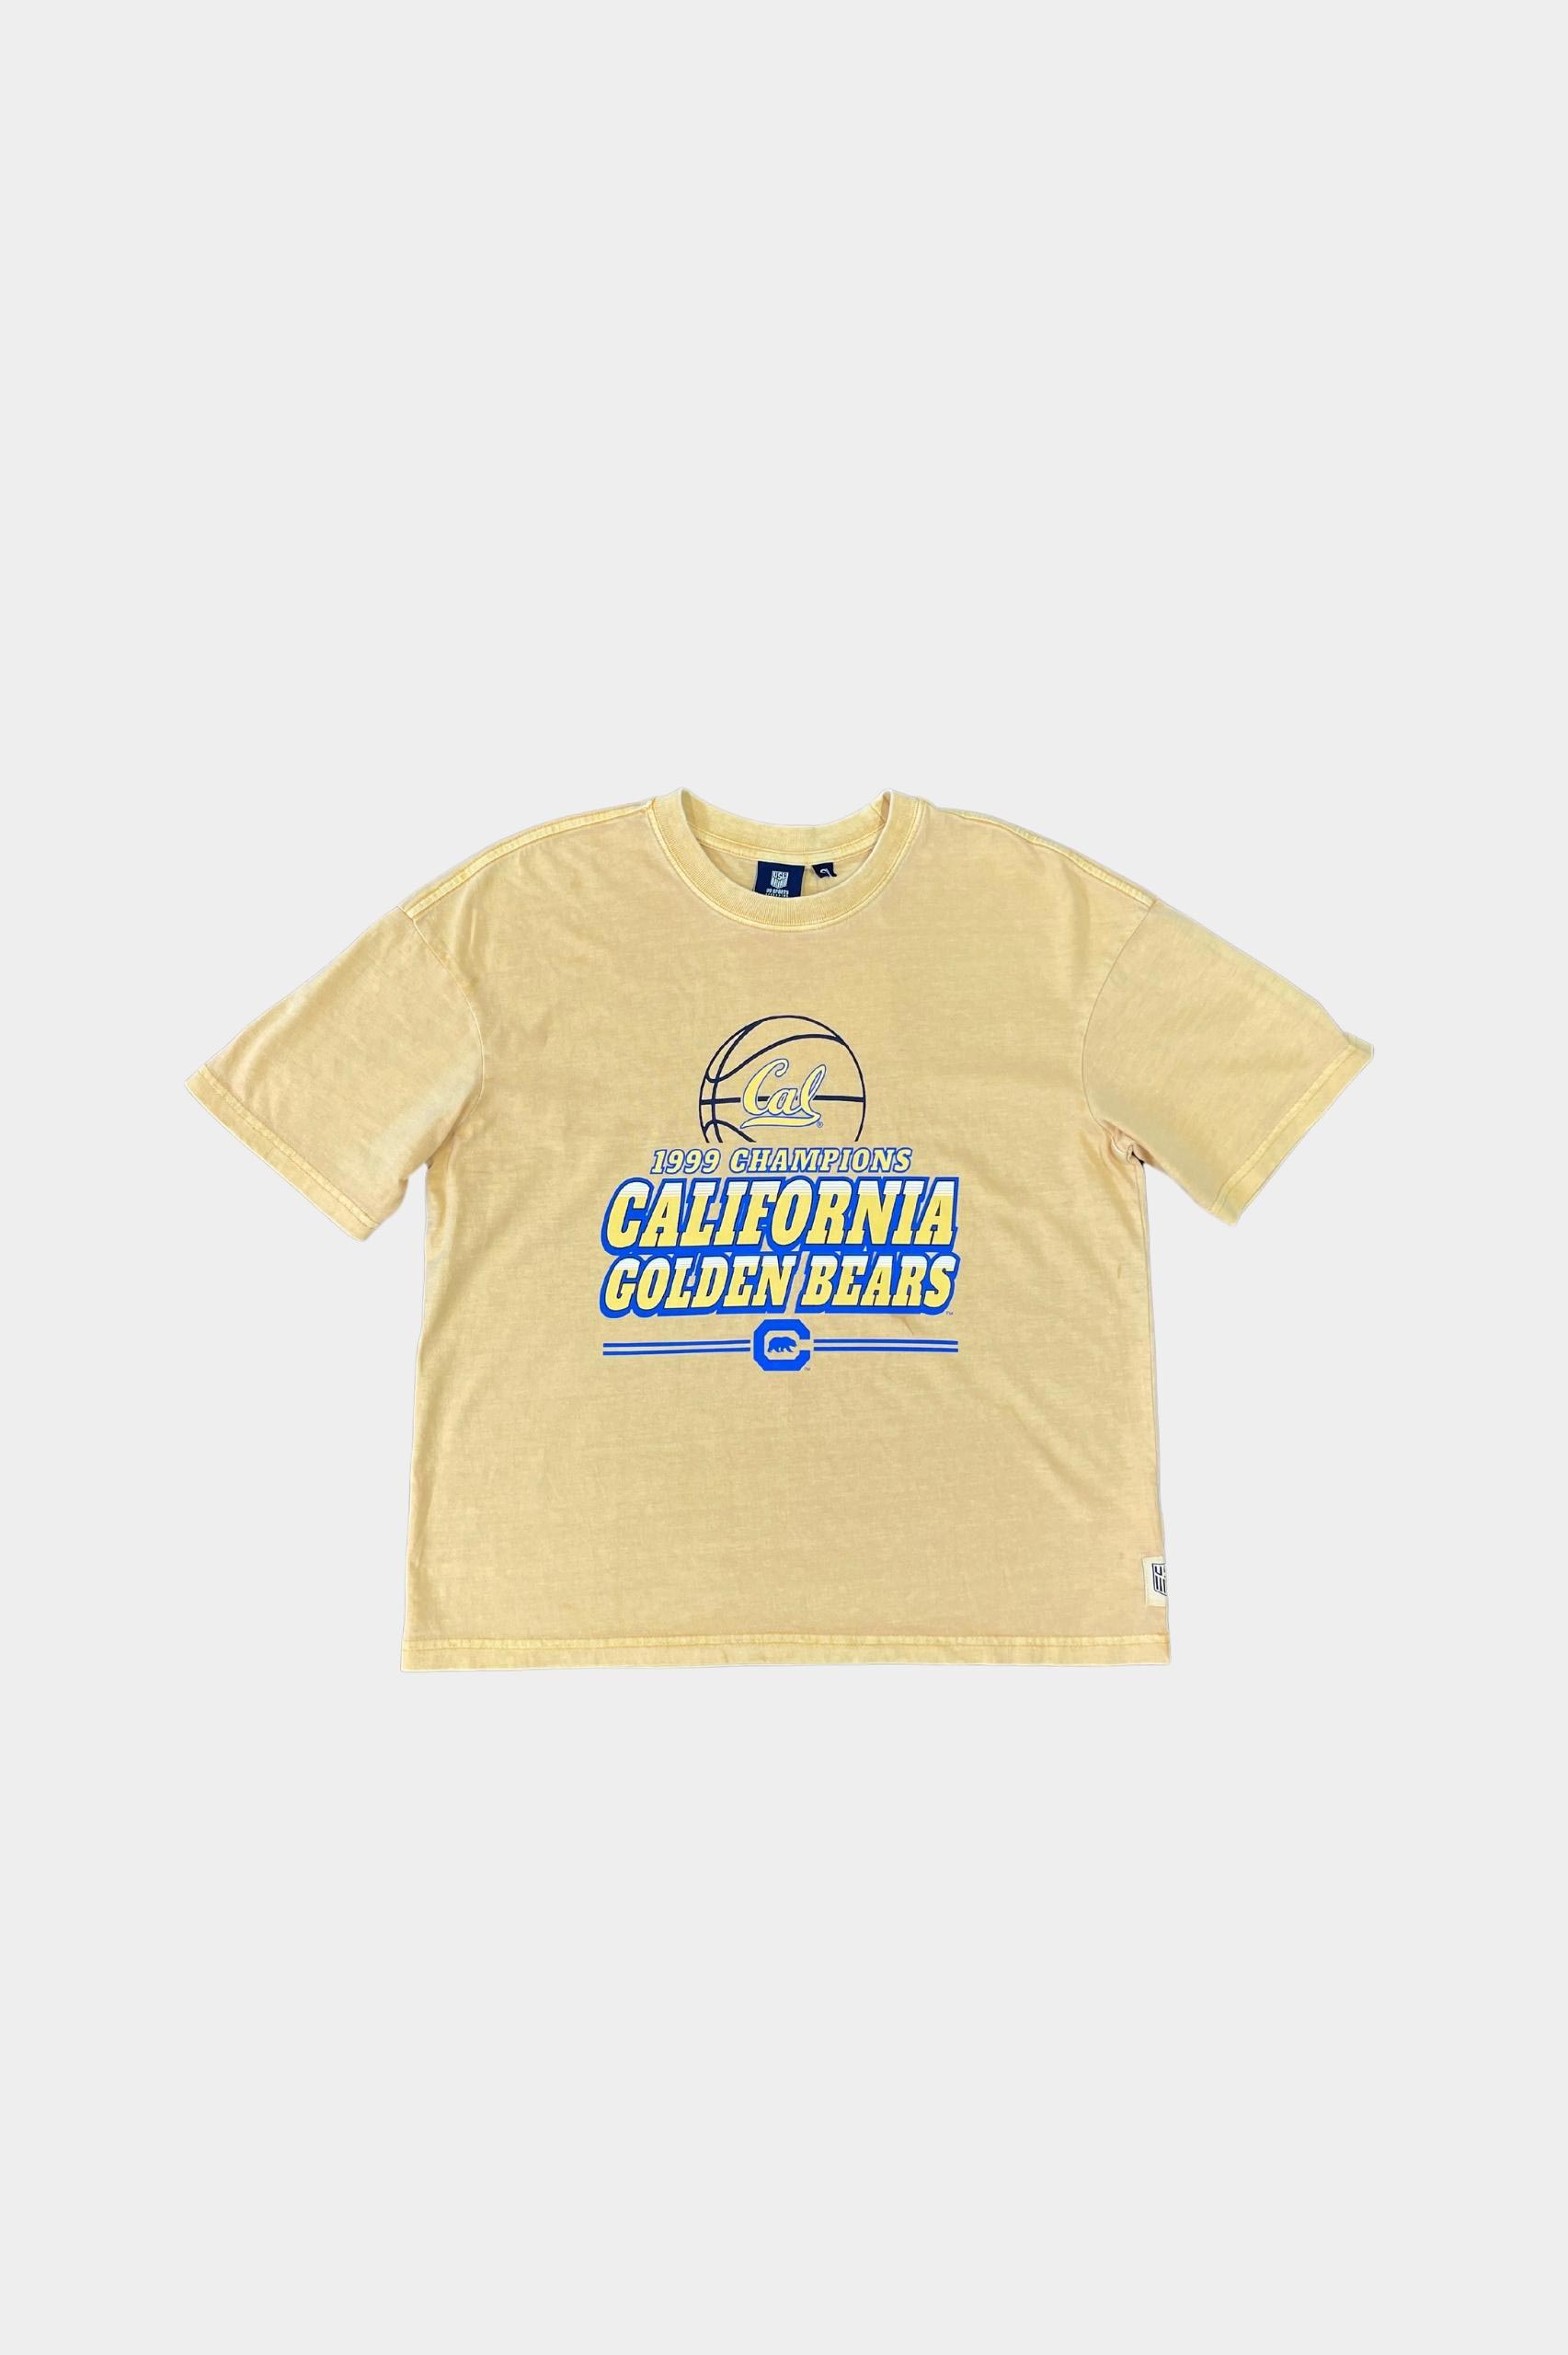 NCAA California Golden Bears Womens Vintage Tee - Golden